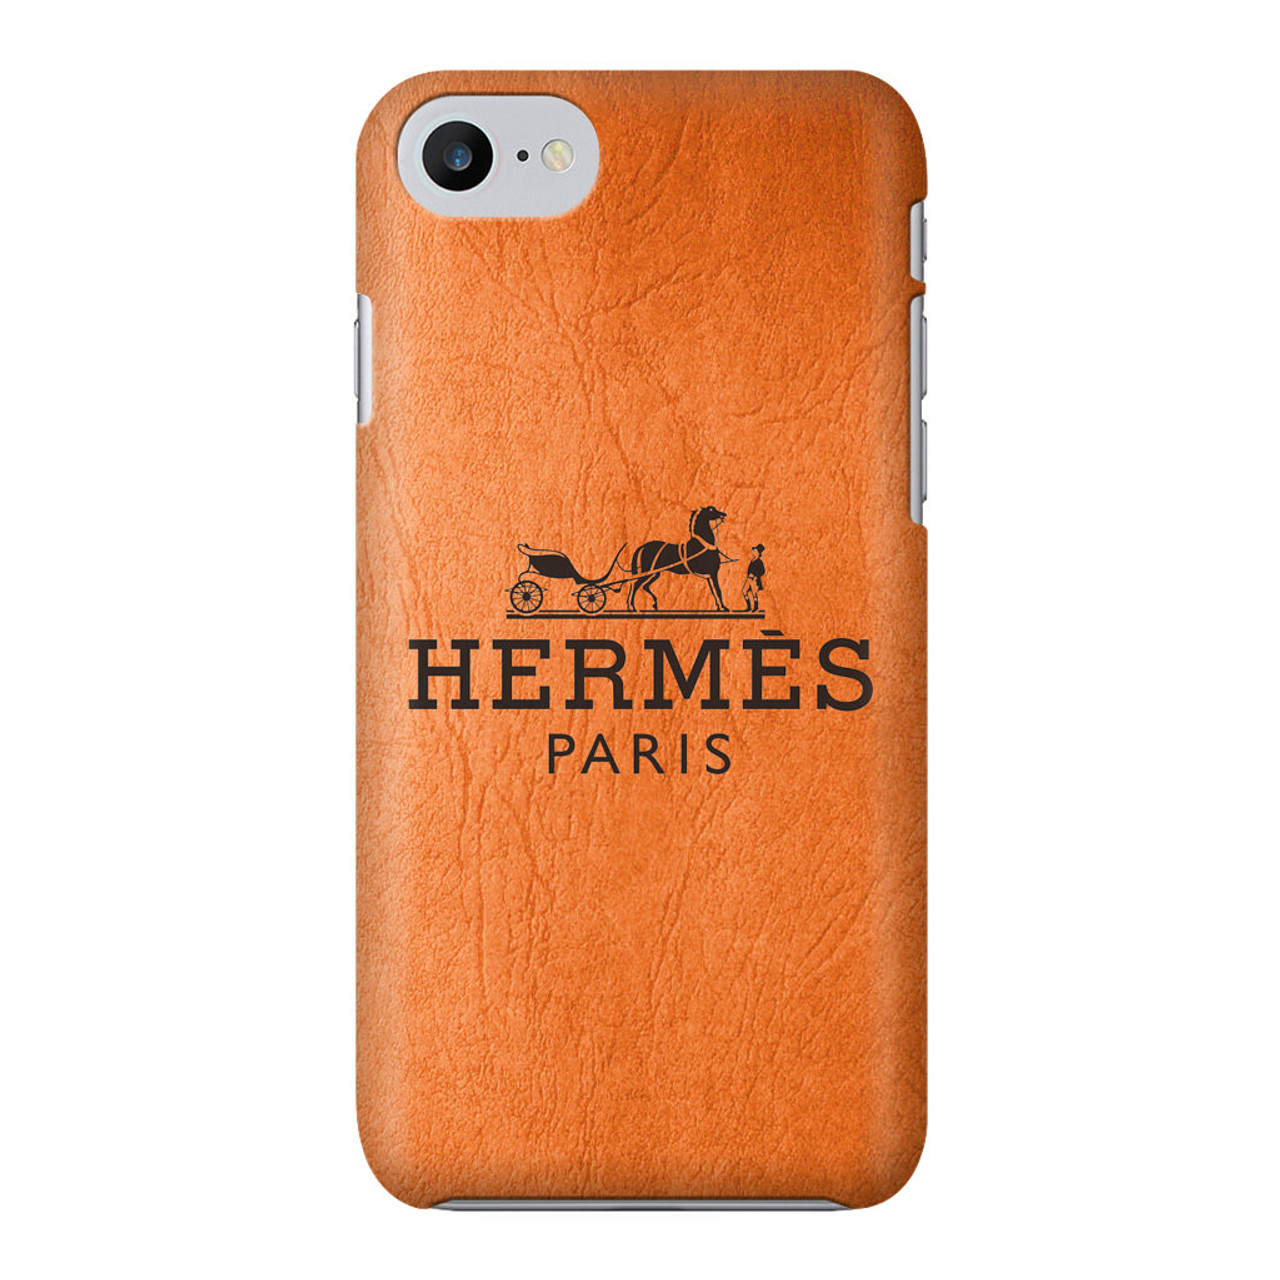 hermes phone case